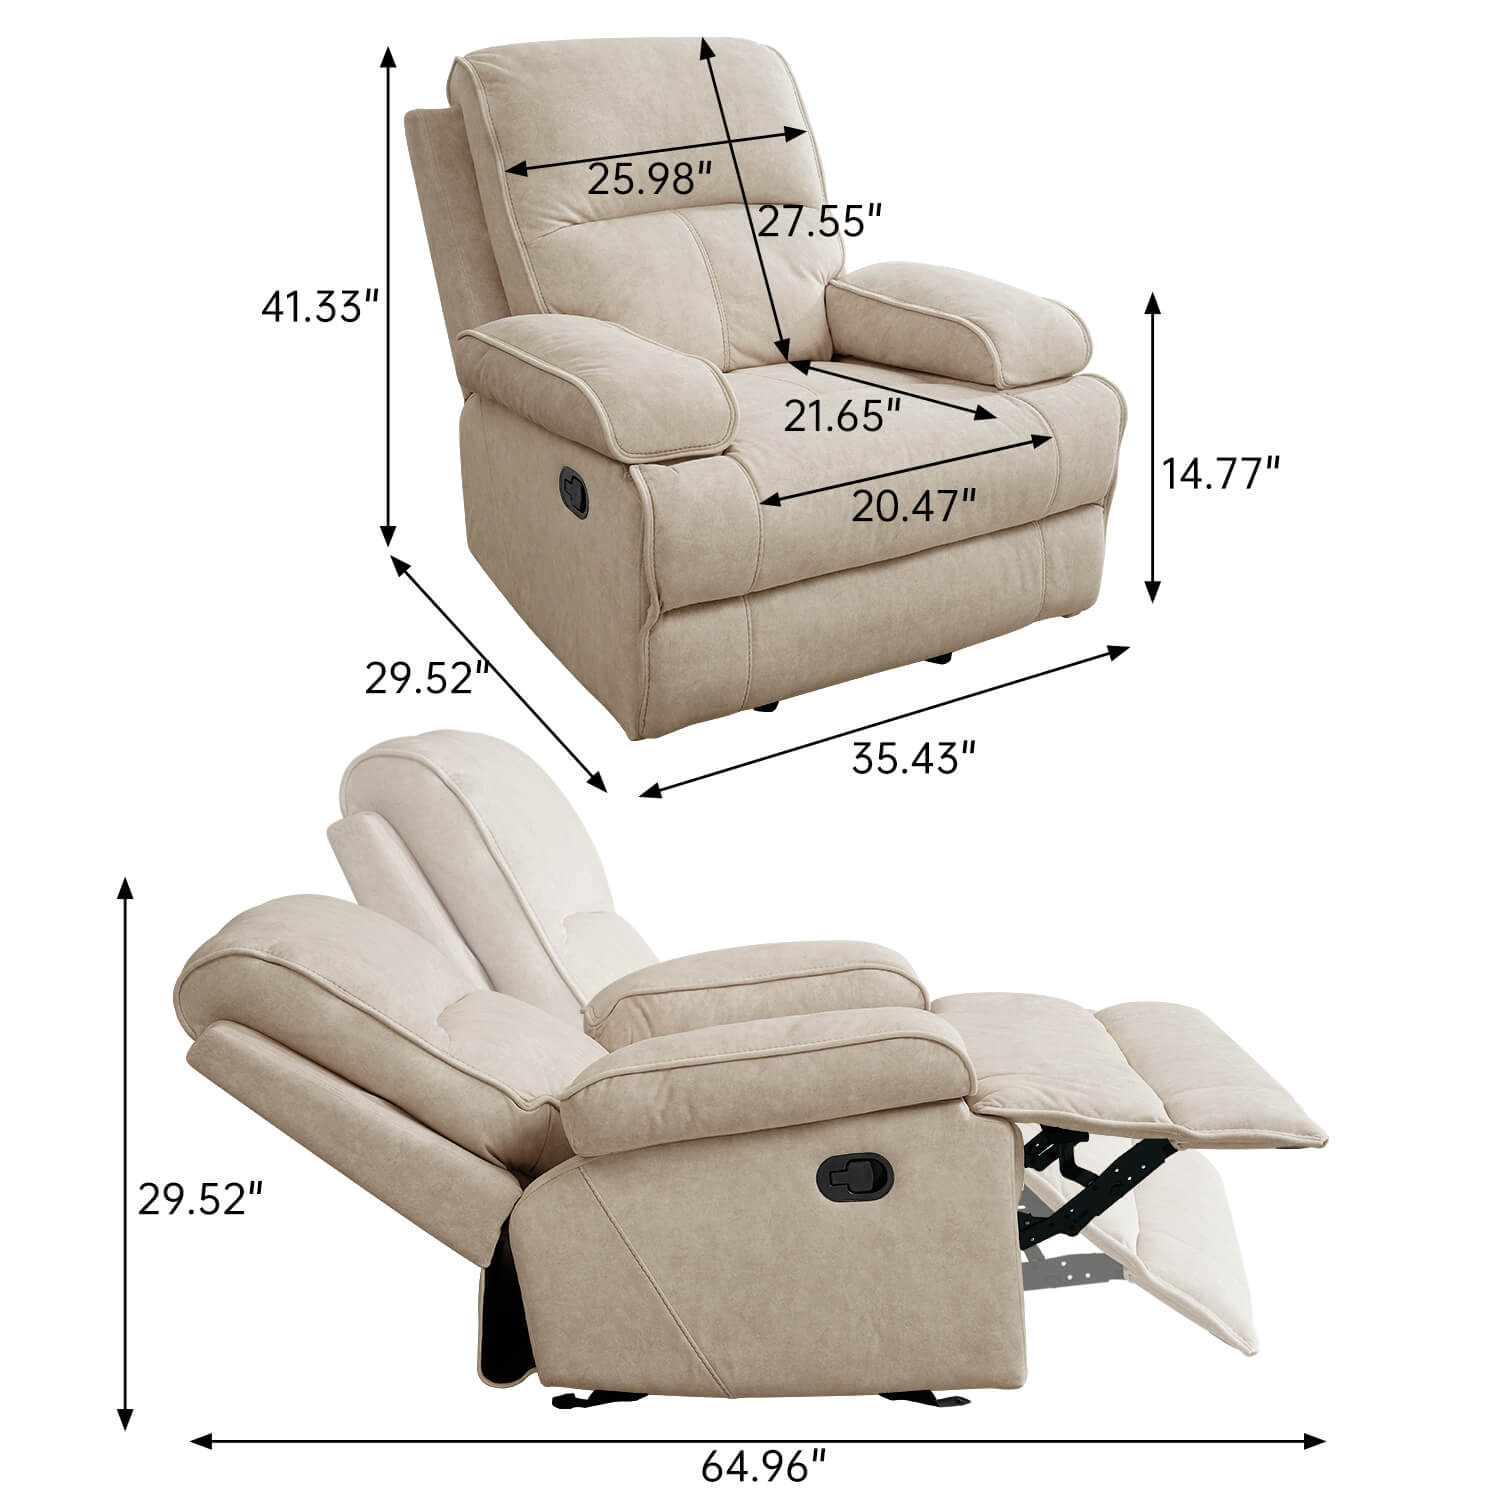 Asjmreye manual recliner chair size